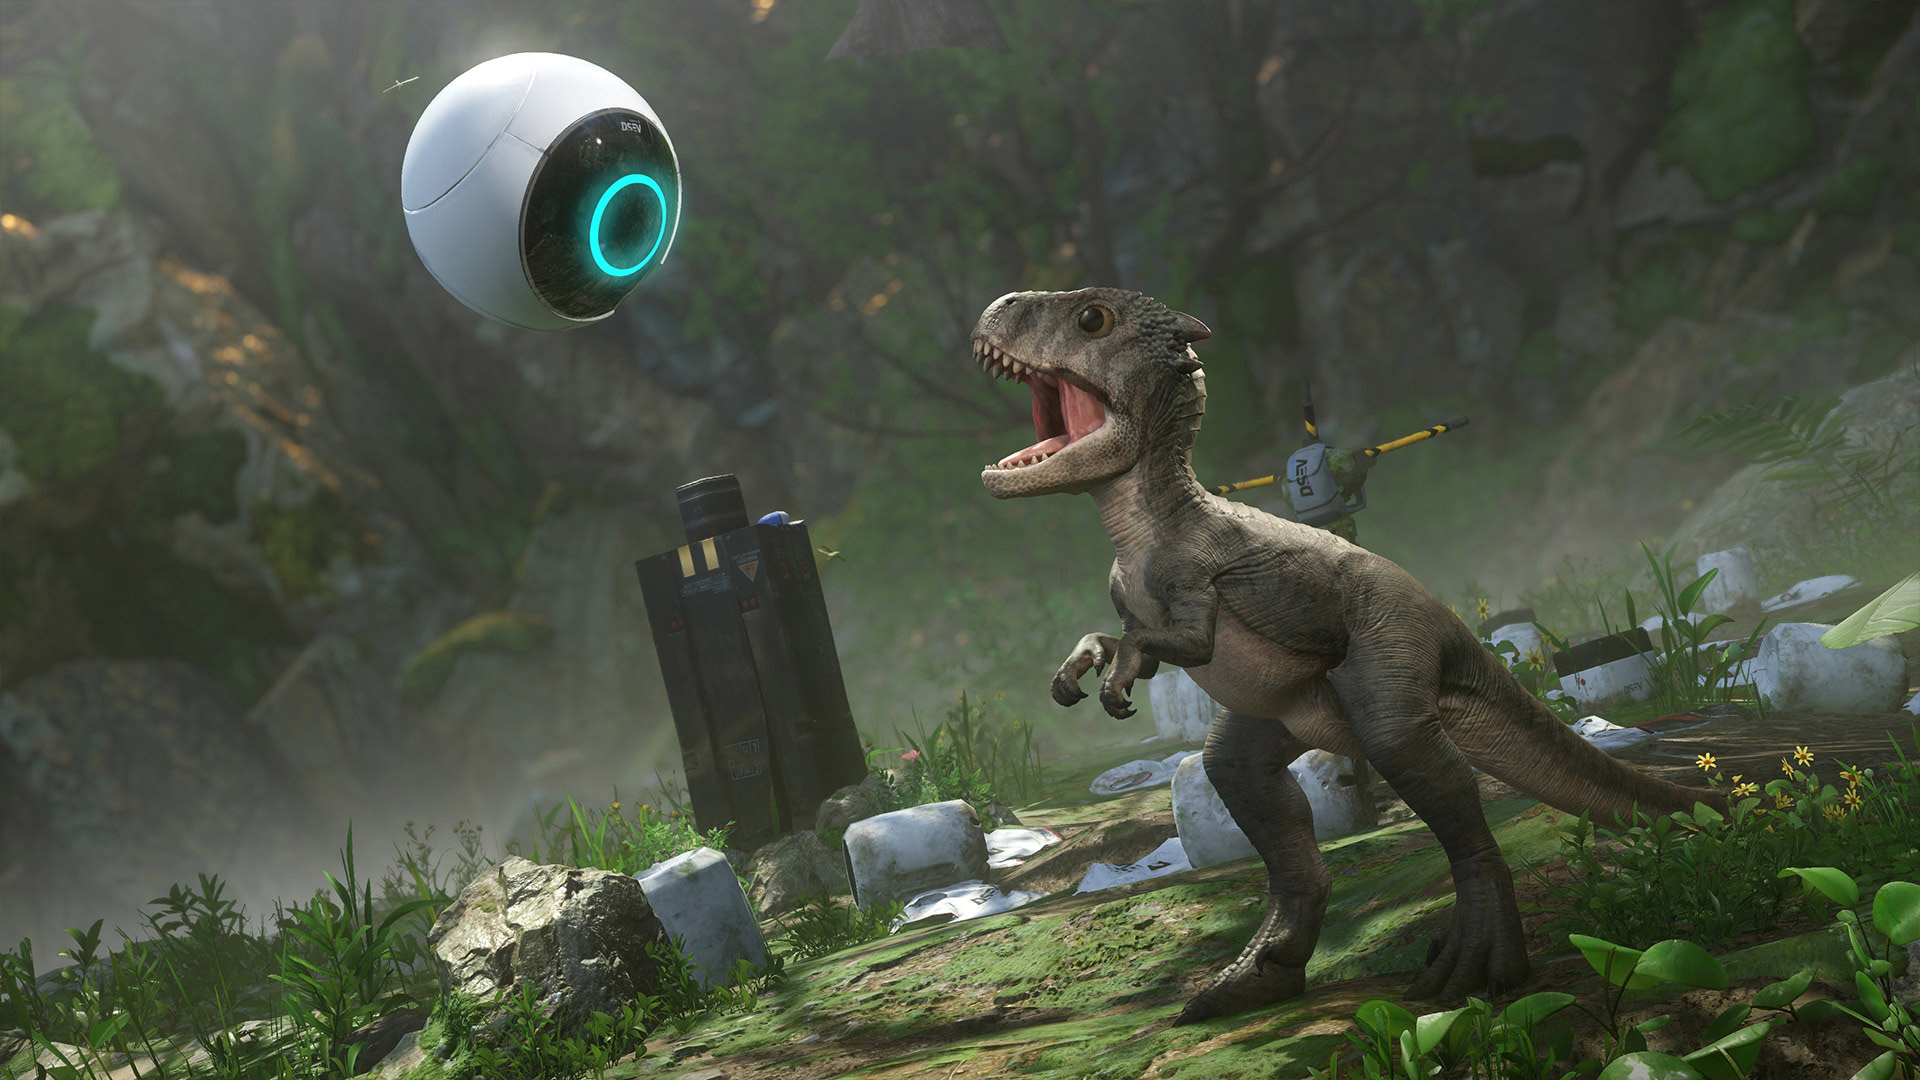 792212 descargar imagen videojuego, robinson: the journey, dinosaurio: fondos de pantalla y protectores de pantalla gratis